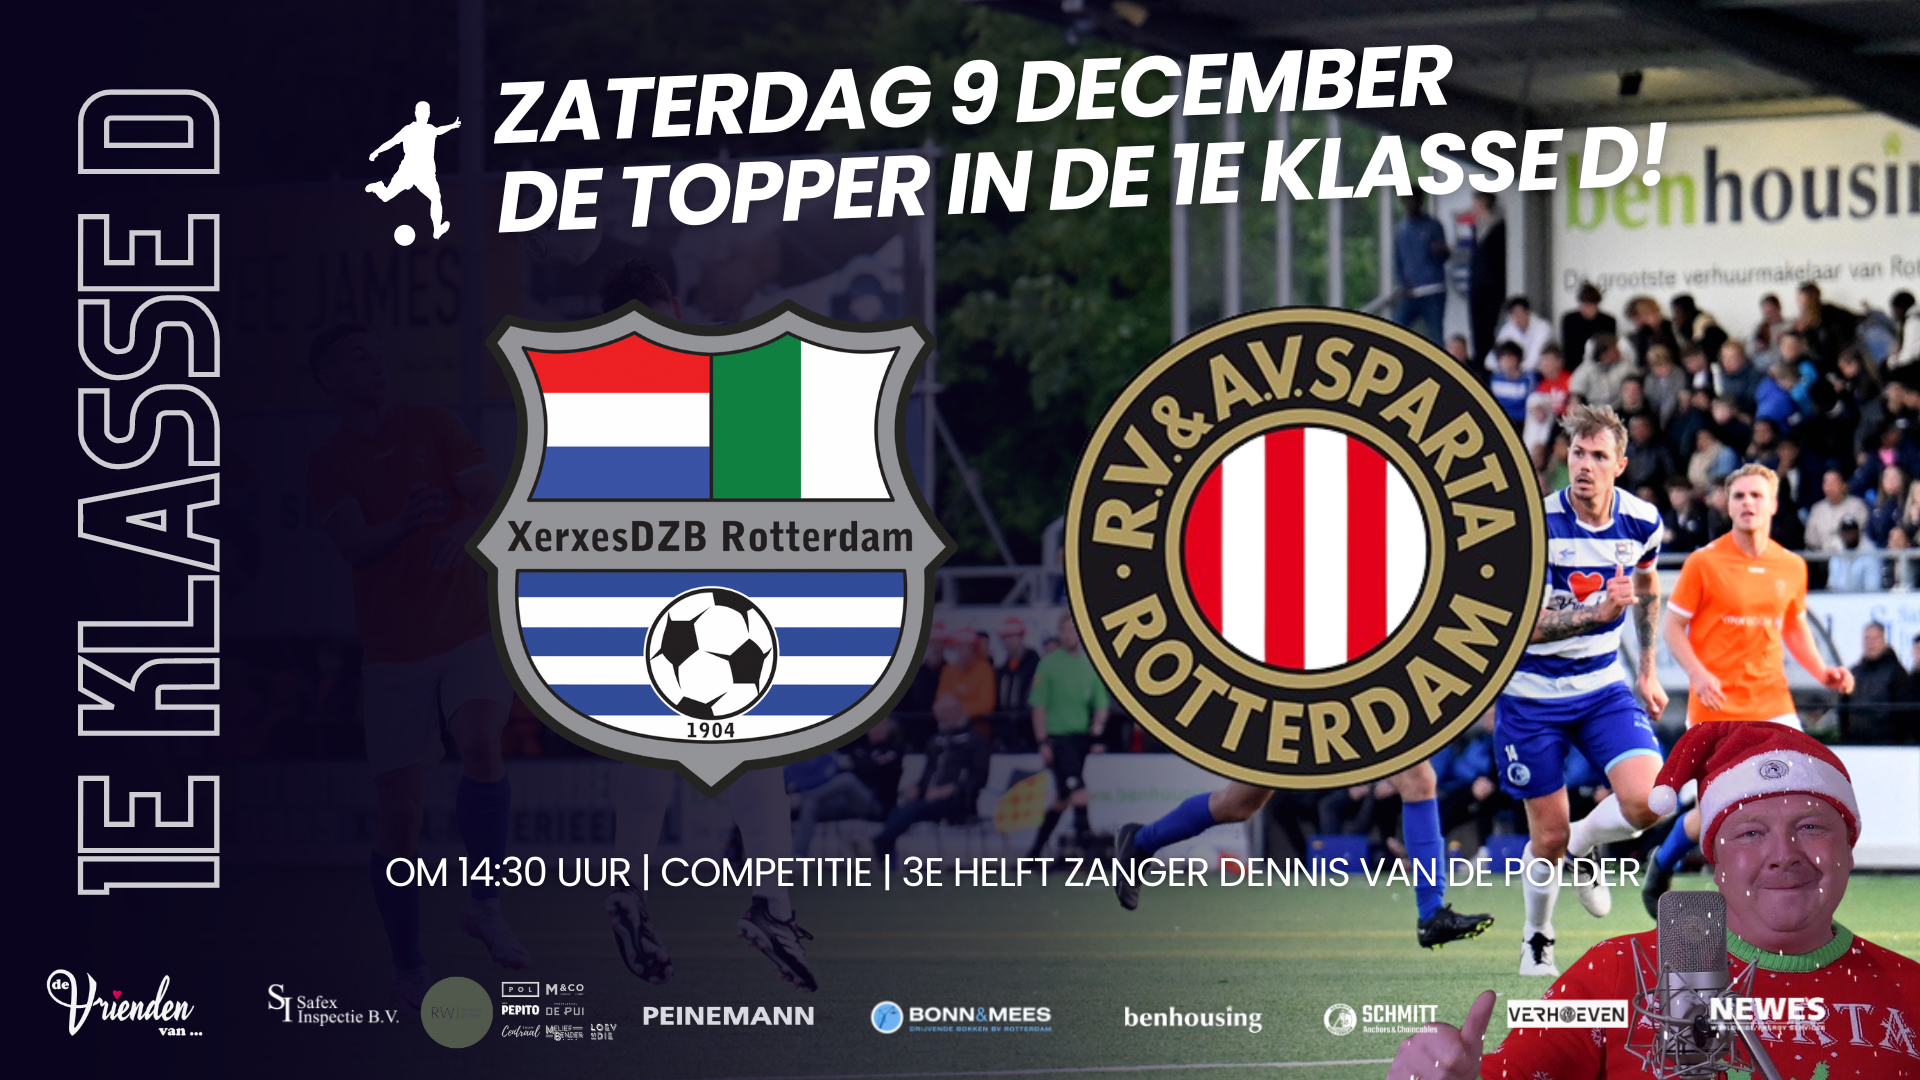 Rotterdamse derby zaterdag bij XerxesDZB!